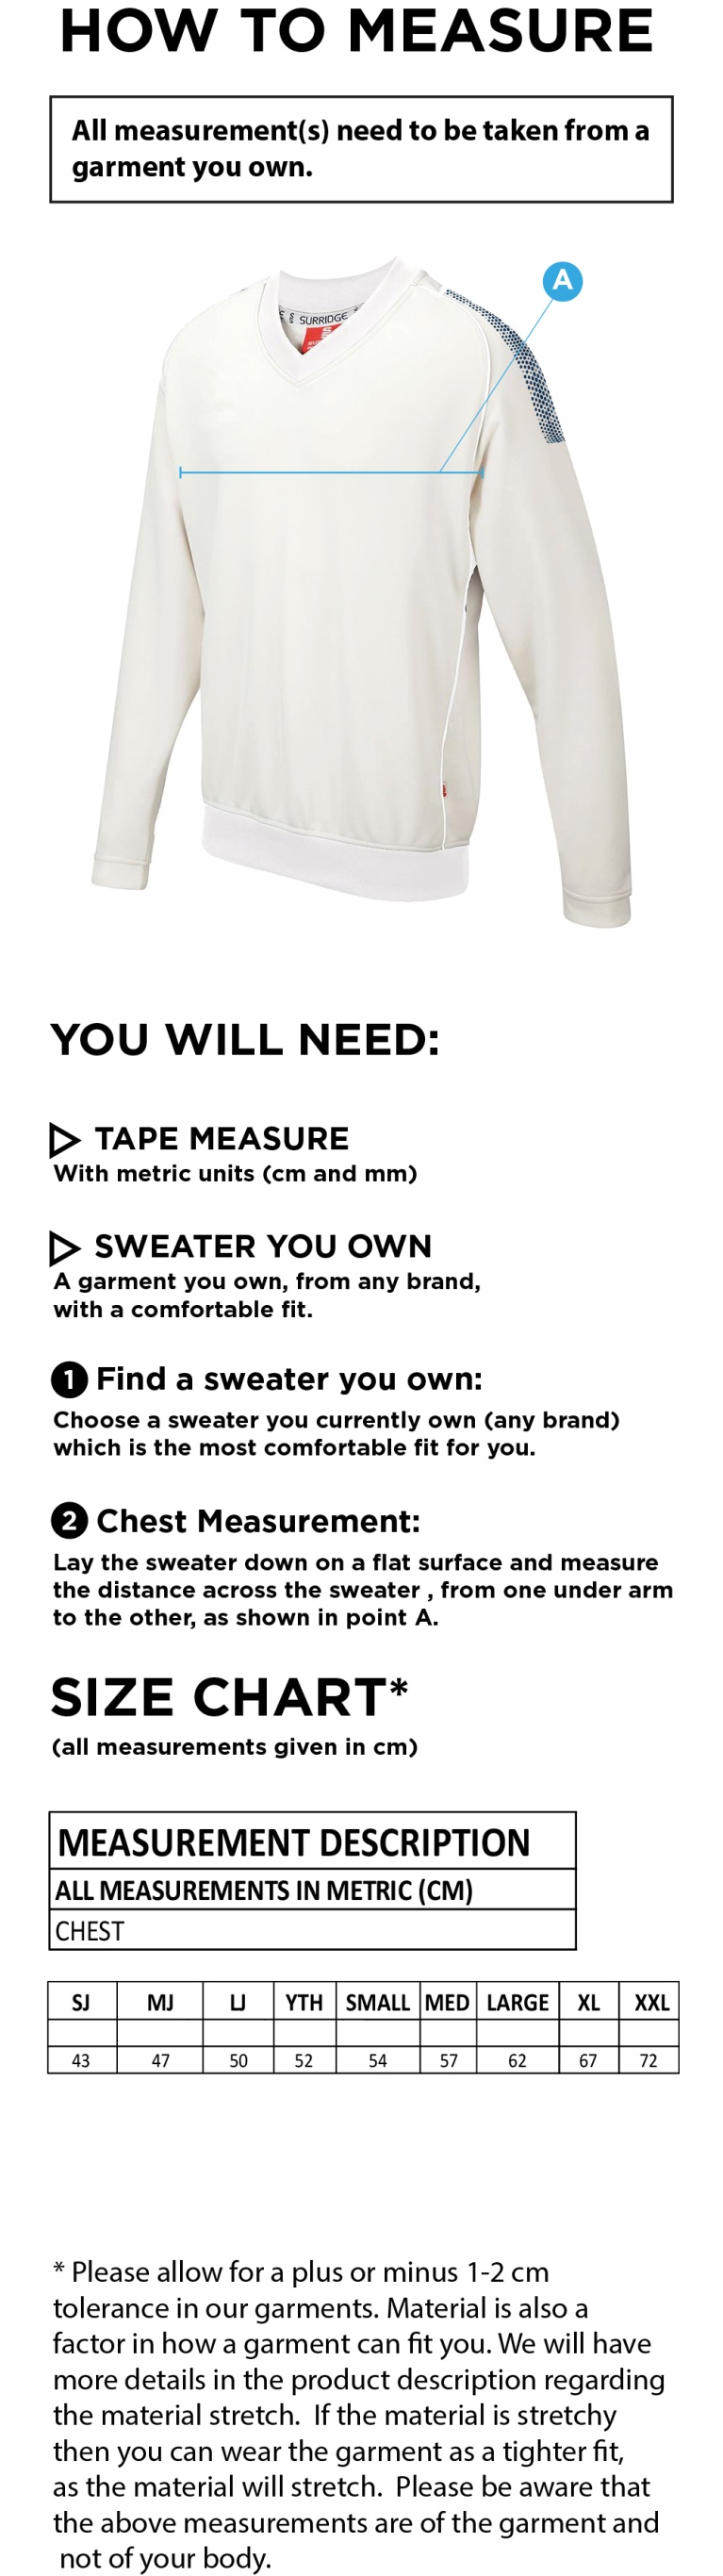 Eridge CC - Dual Long Sleeved Sweater - Size Guide